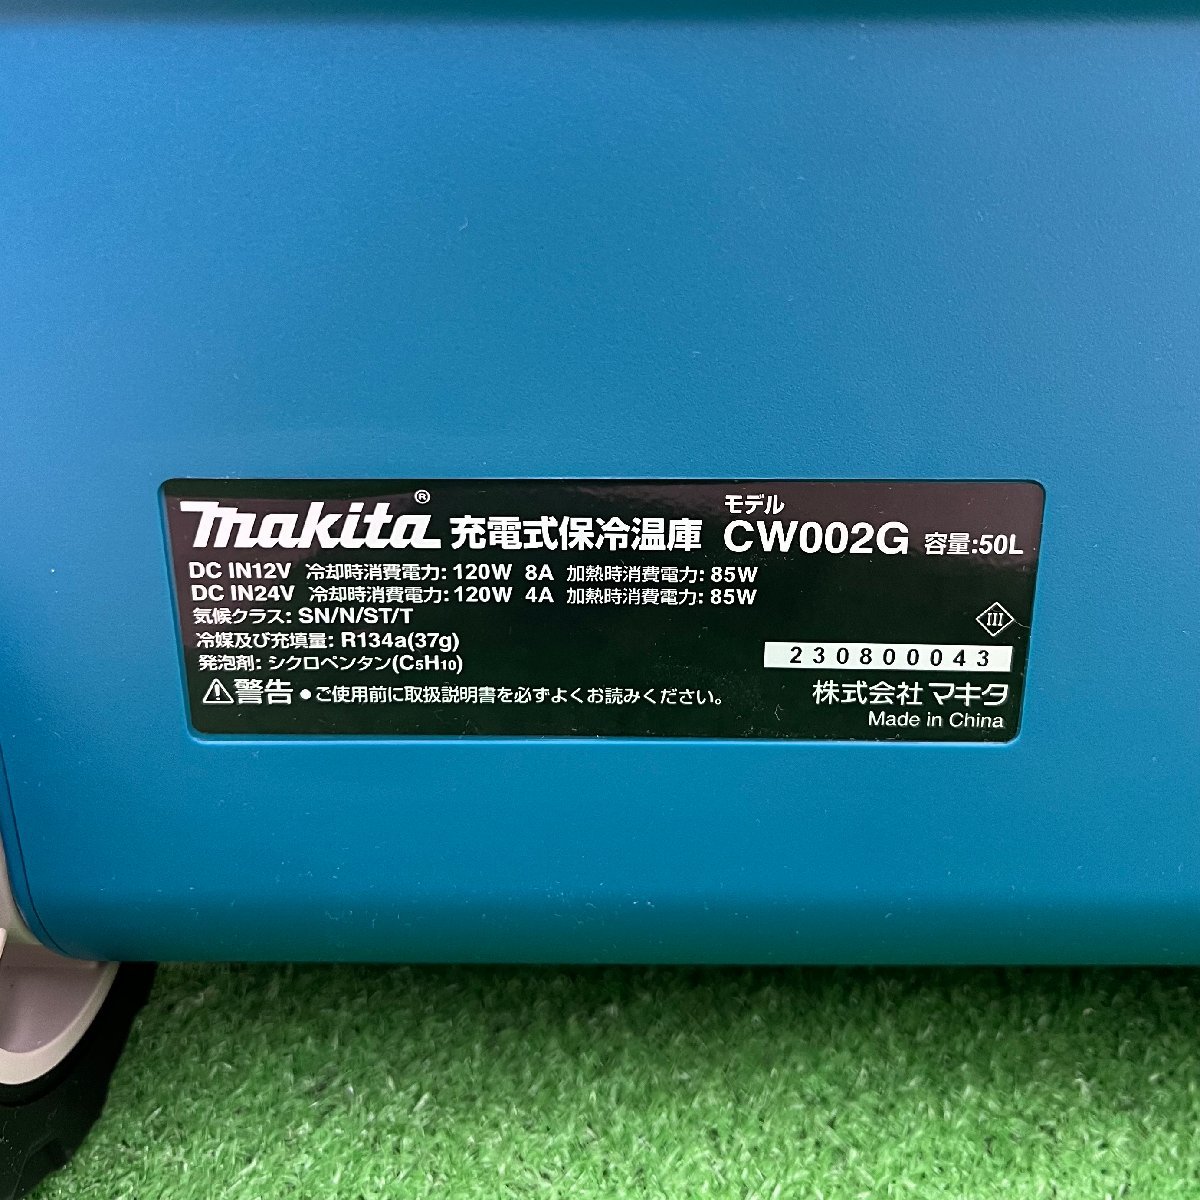  Makita 40Vmax 18V 100V 50L заряжающийся термос температура .CW002G корпус только ( не использовался товар )